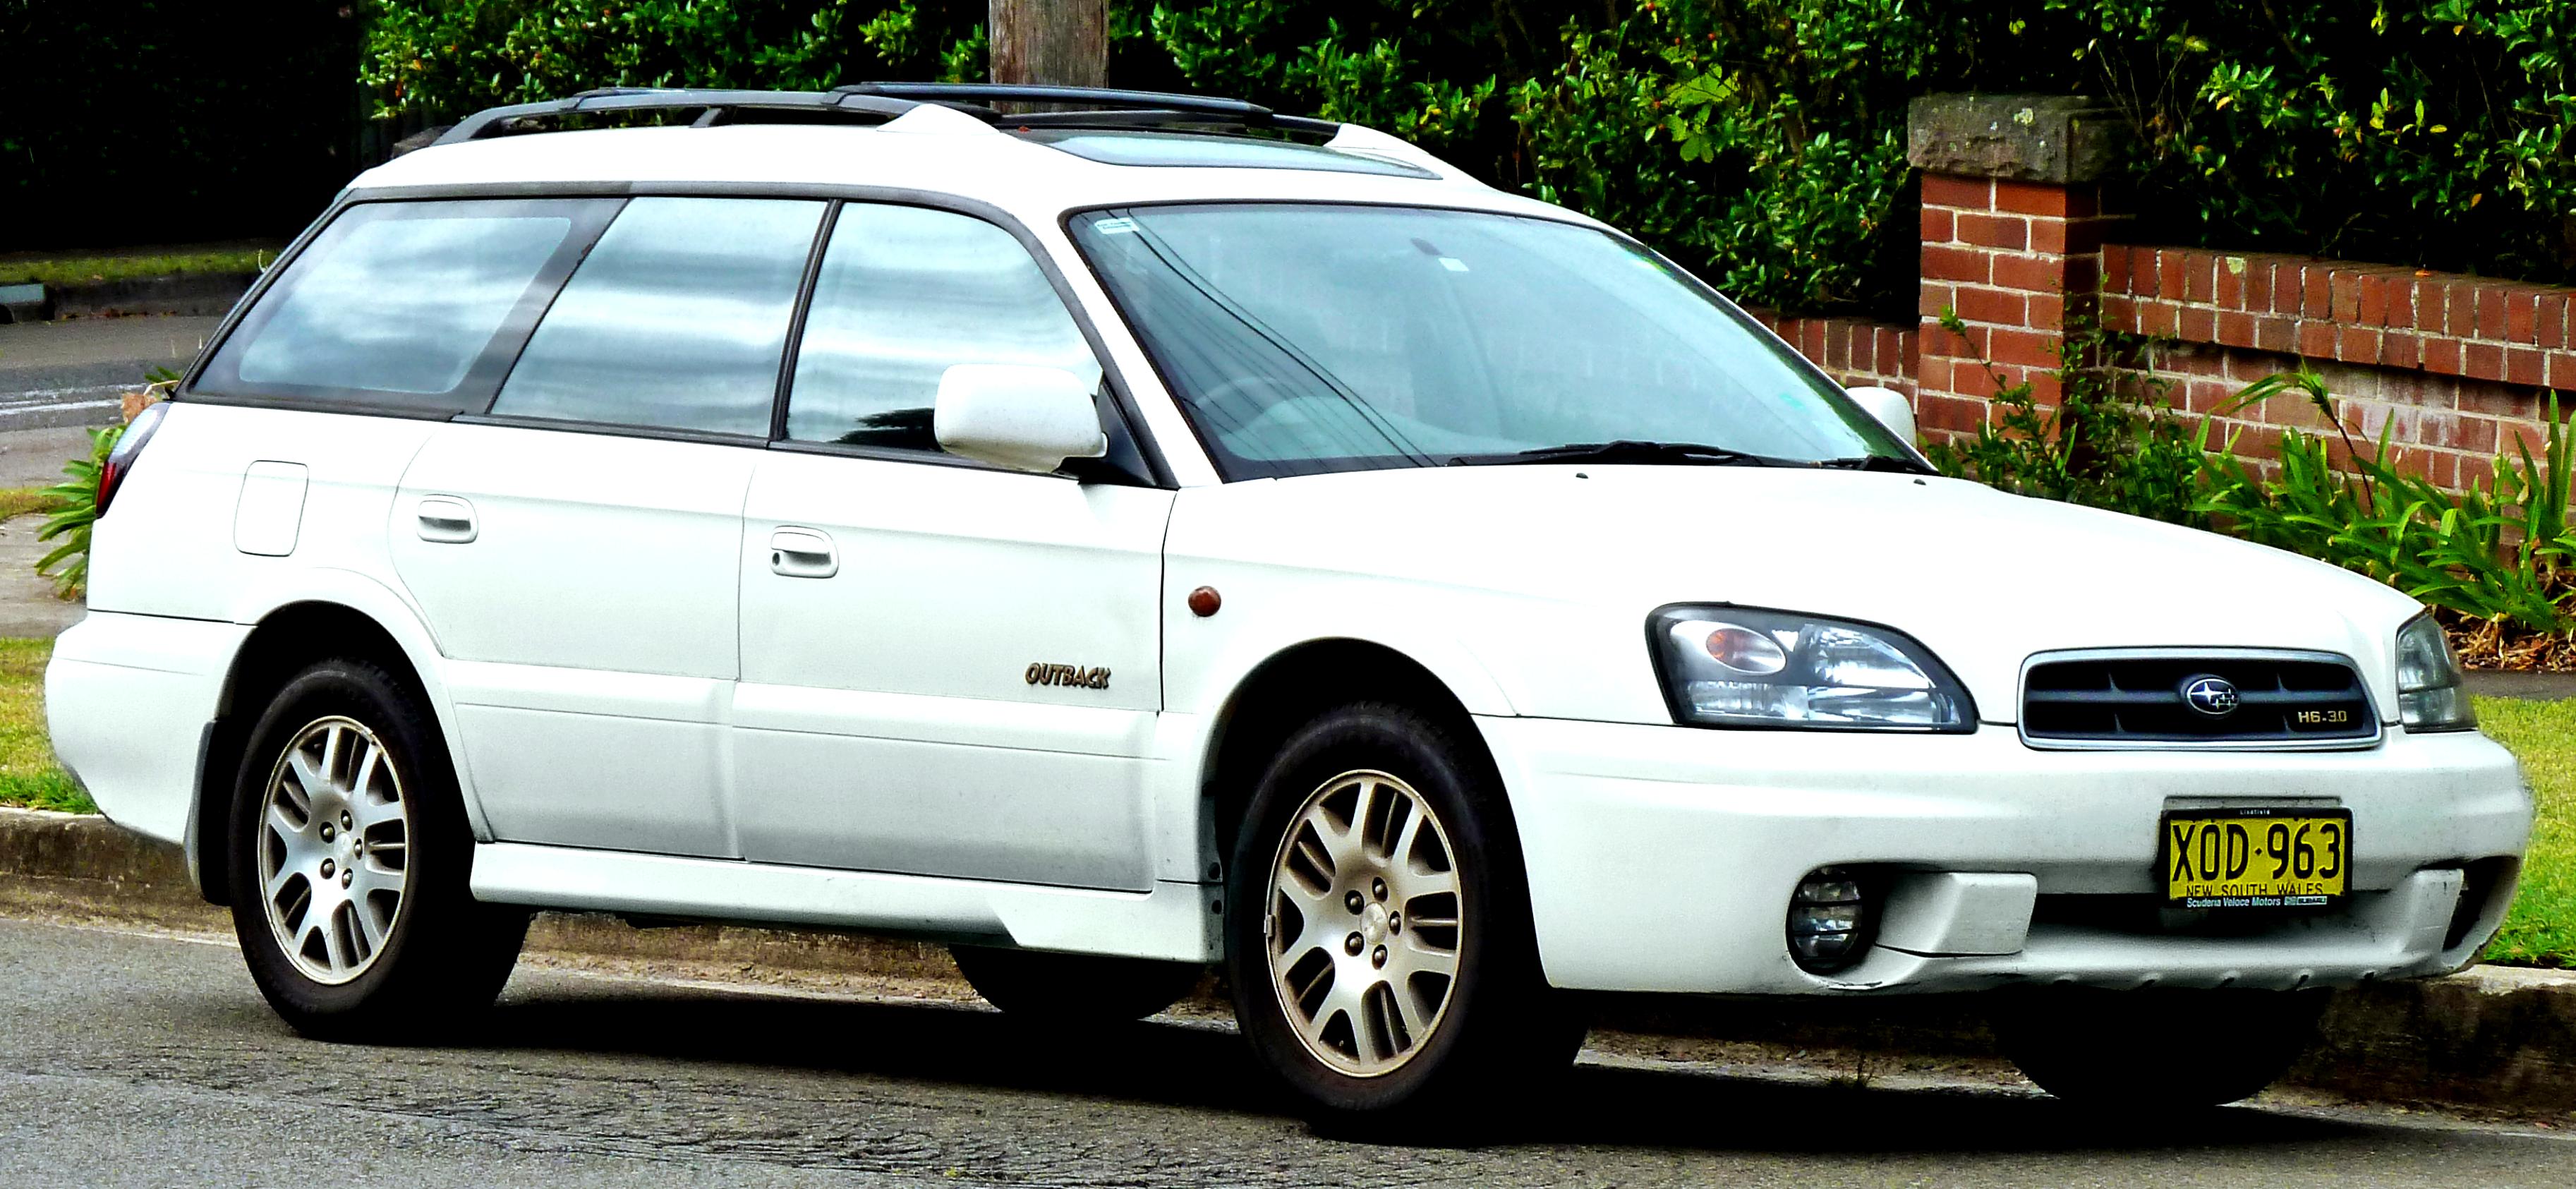 Subaru Legacy 2002 #6